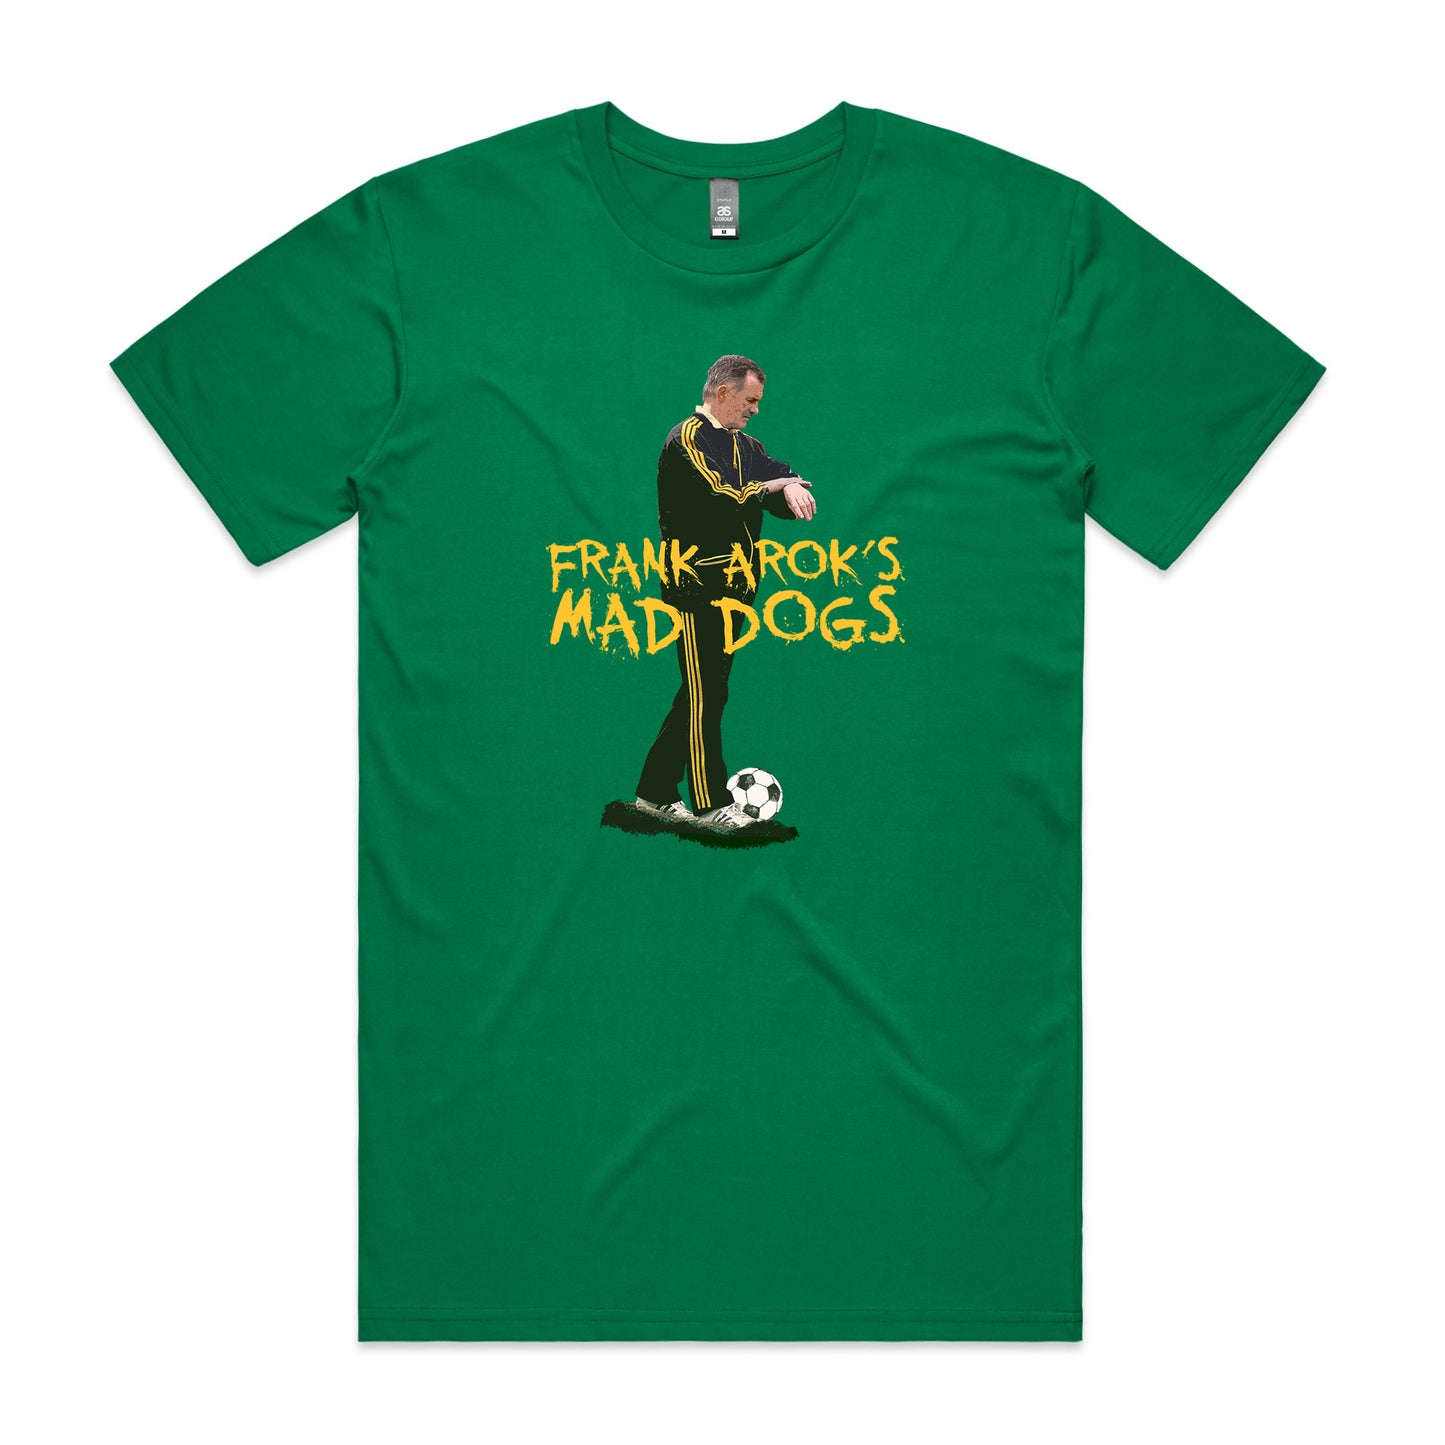 Frank Arok's Mad Dogs T-shirt